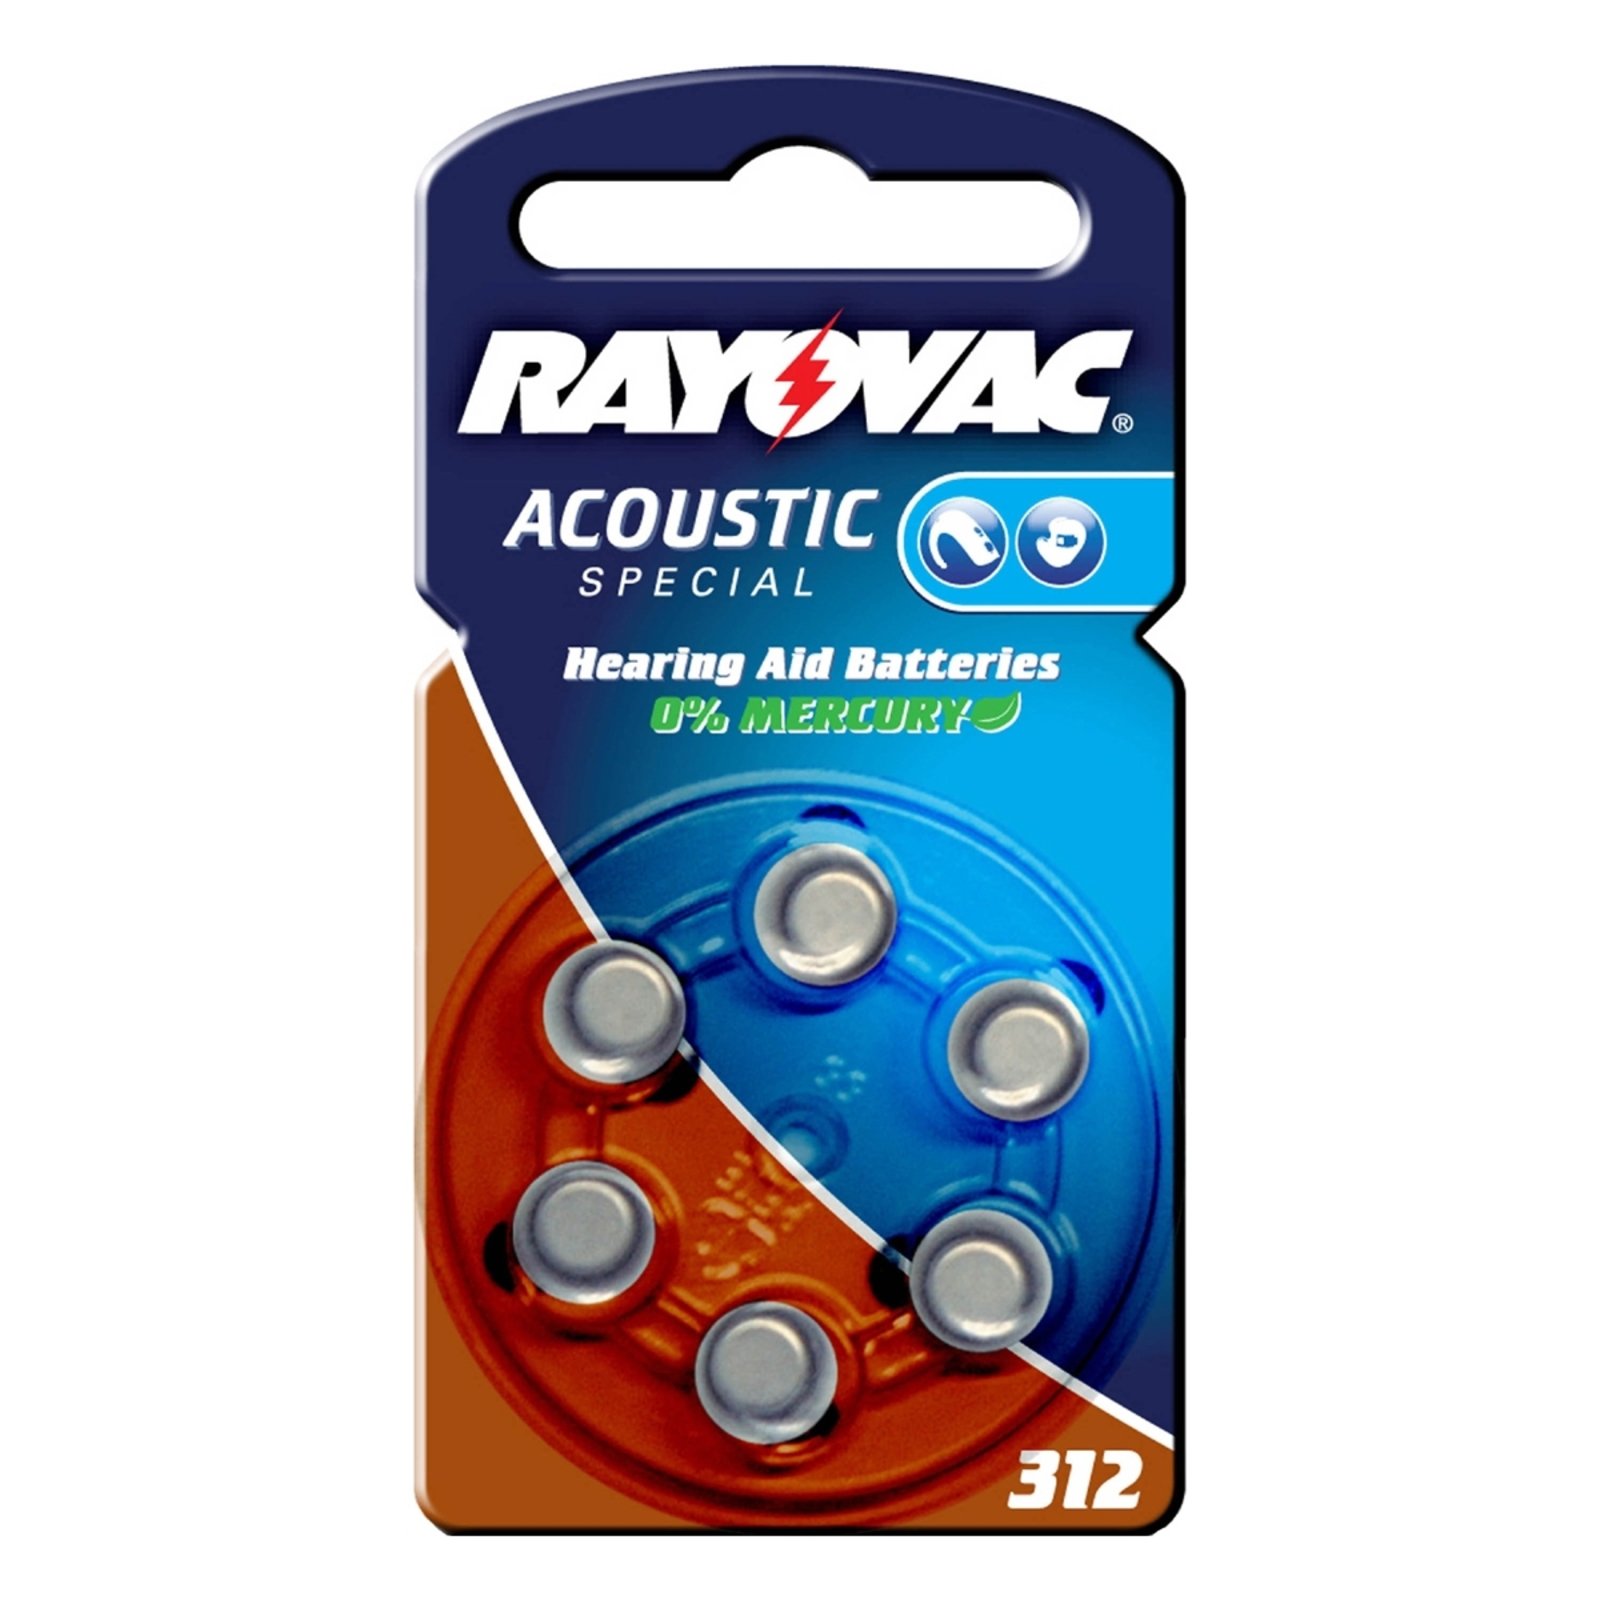 Baterie buton Rayovac 312 Acoustic 1,4V, 180m/Ah